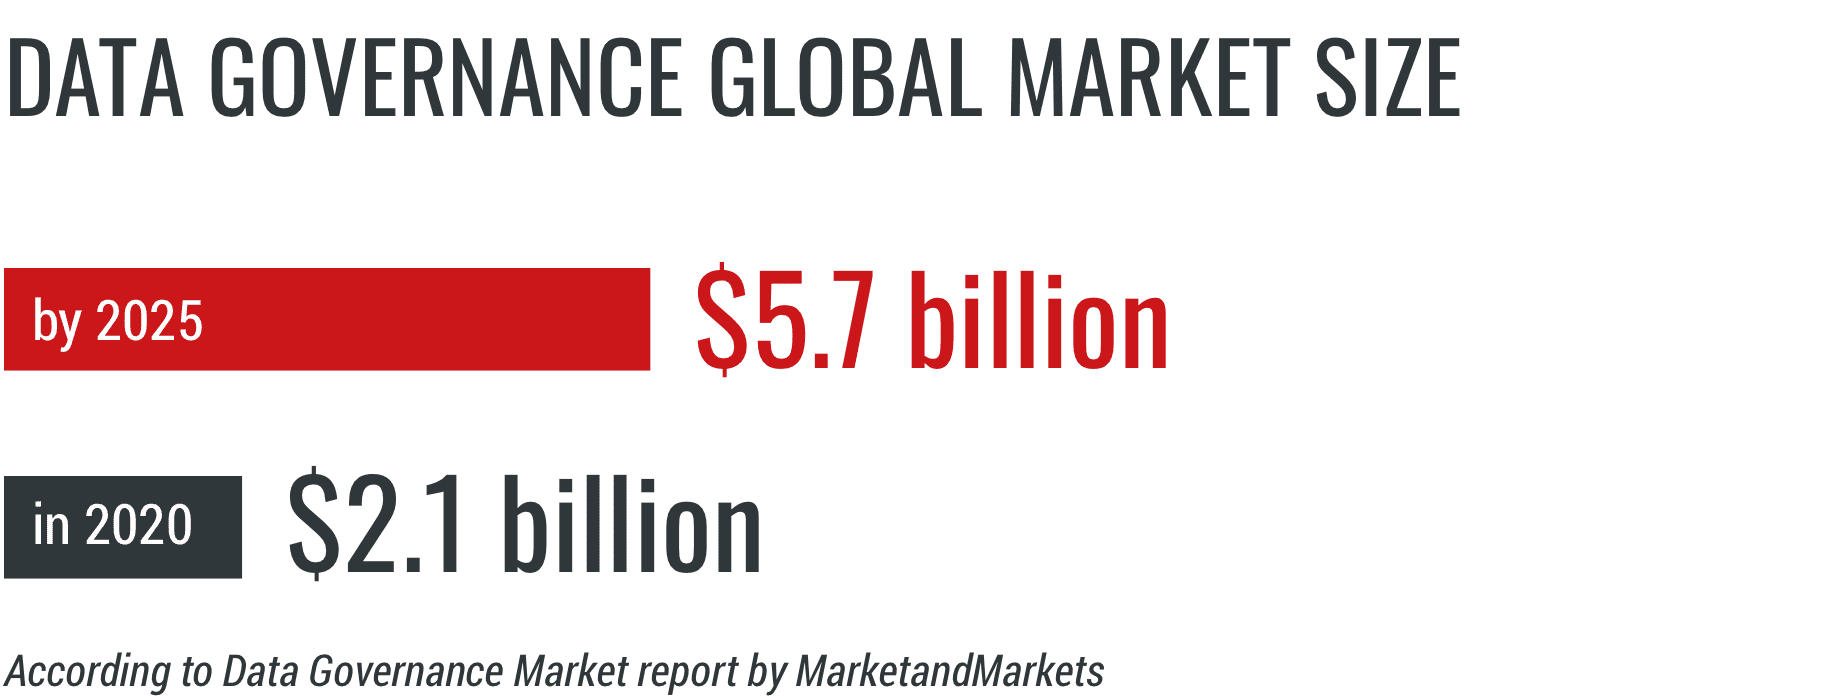 Data Governance Global Market Size